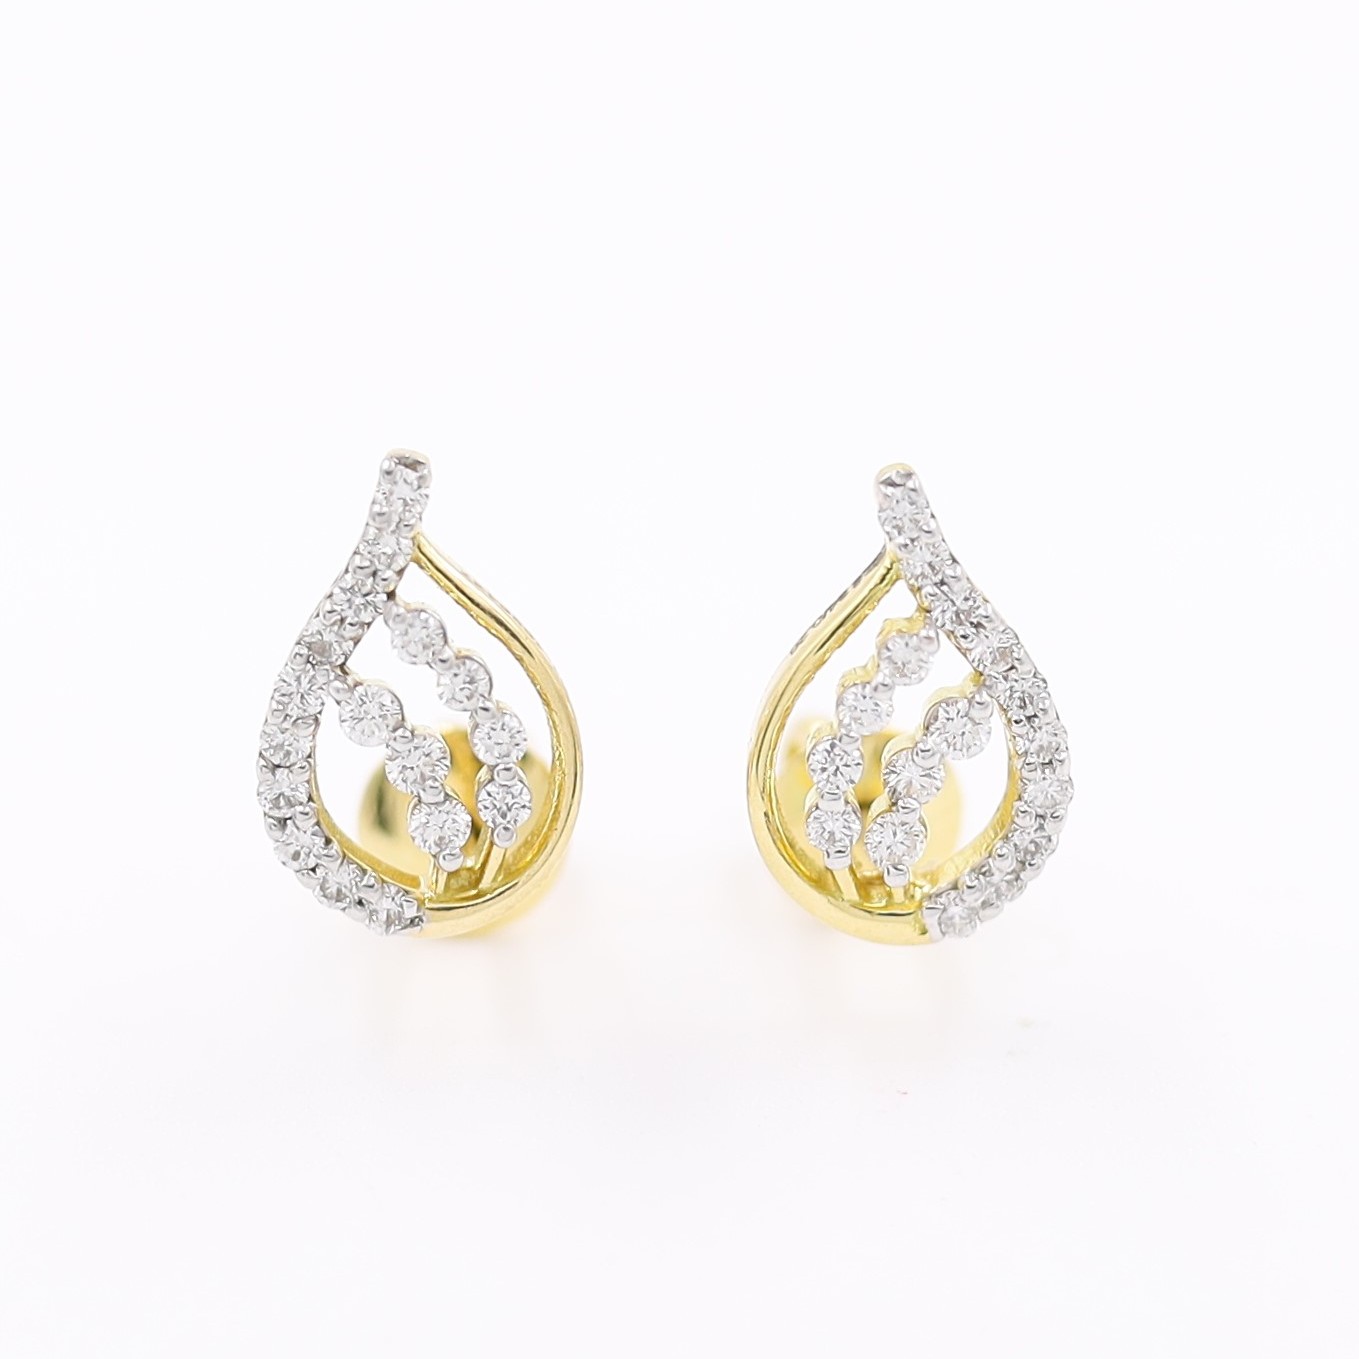 Classy 18 Karat Yellow Gold Daimond Stud Earrings